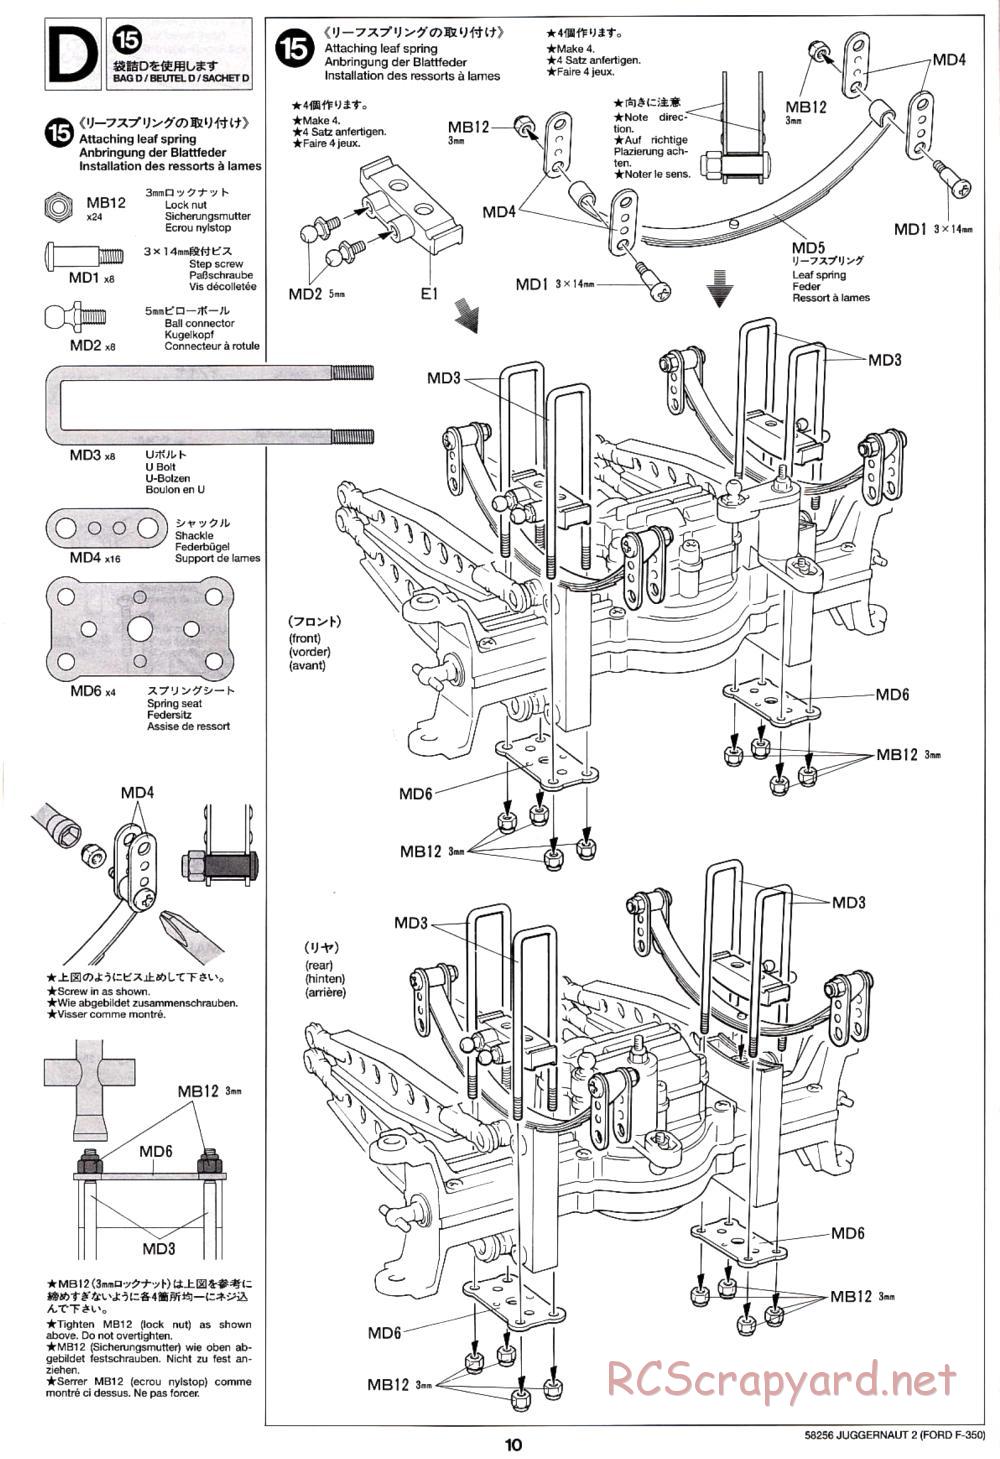 Tamiya - Juggernaut 2 Chassis - Manual - Page 10